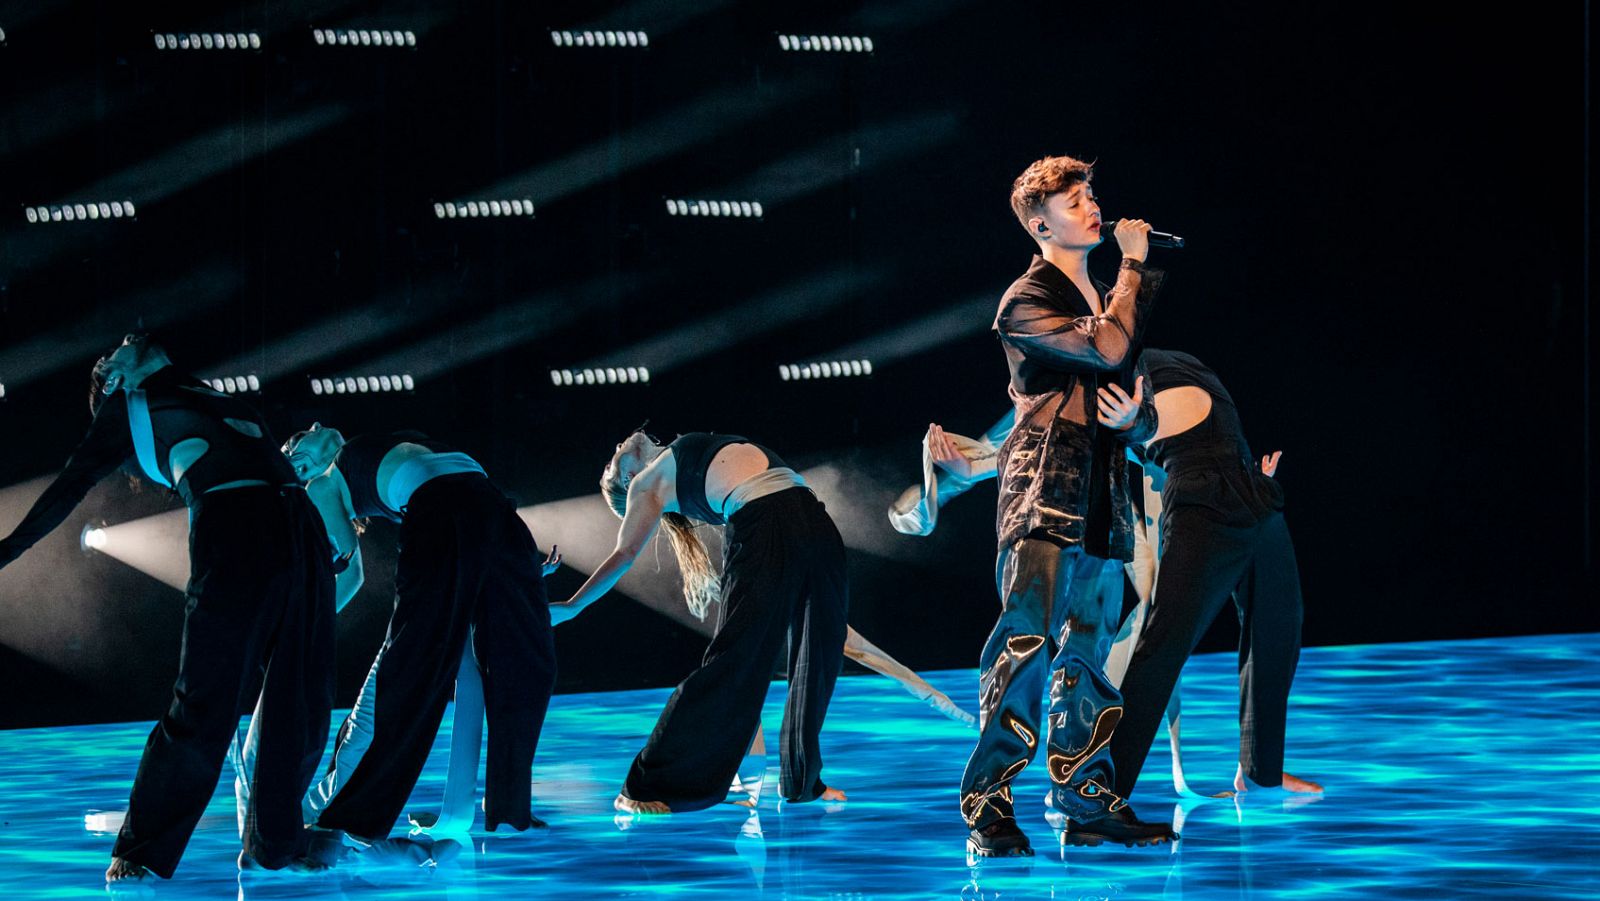 Suiza - Remo Forrer con "Watergun" en la Semifinal 1 | Eurovisión